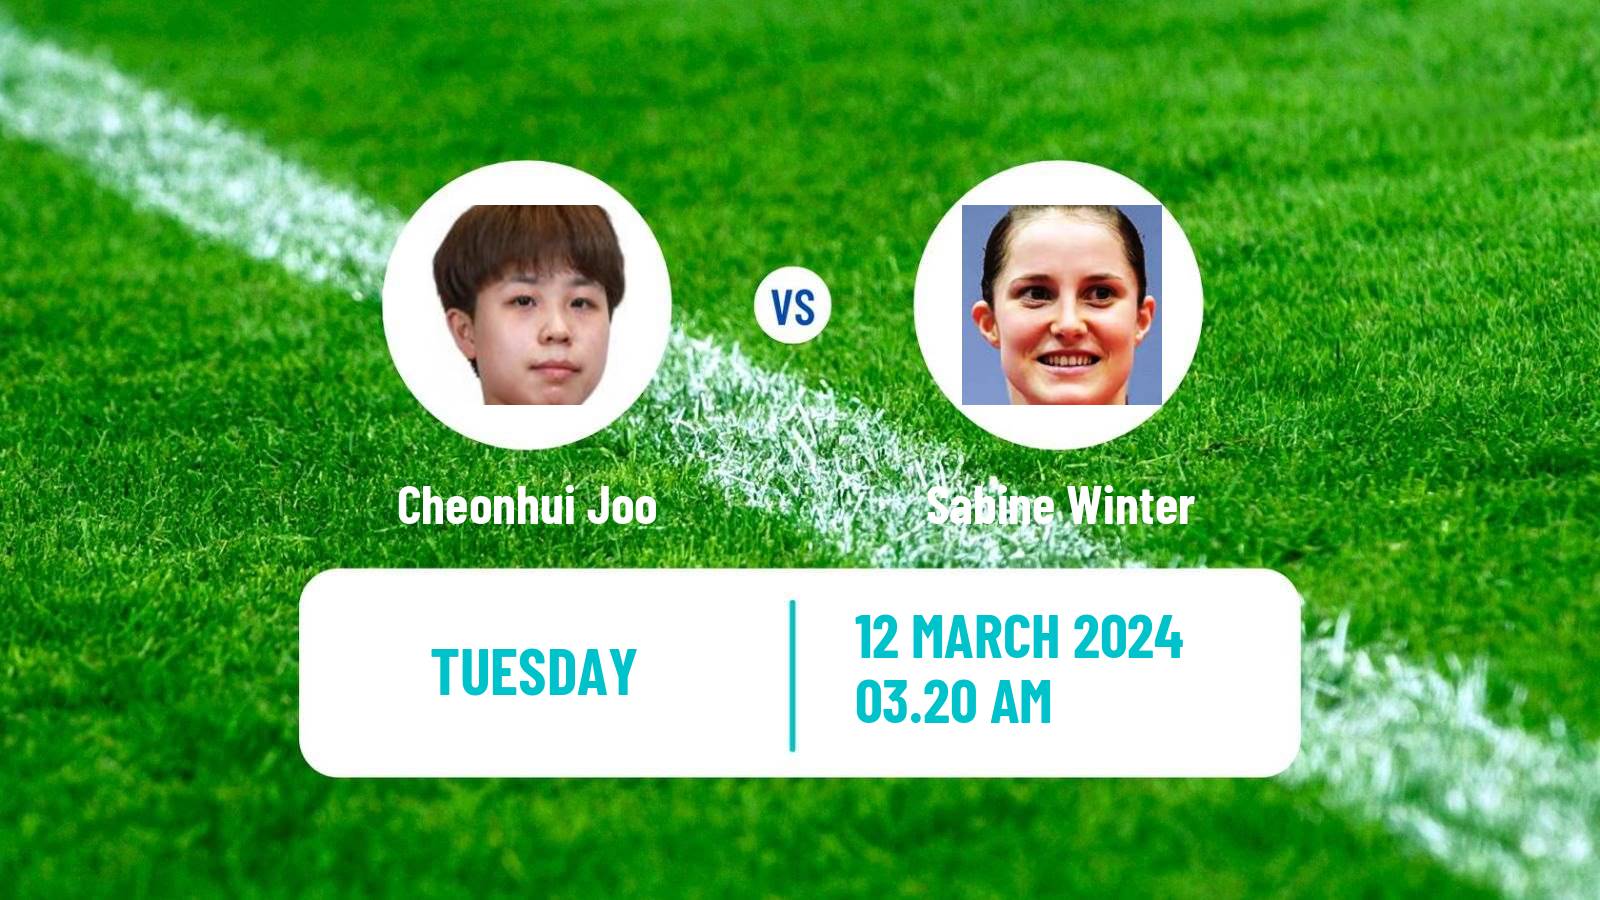 Table tennis Singapore Smash Women Cheonhui Joo - Sabine Winter